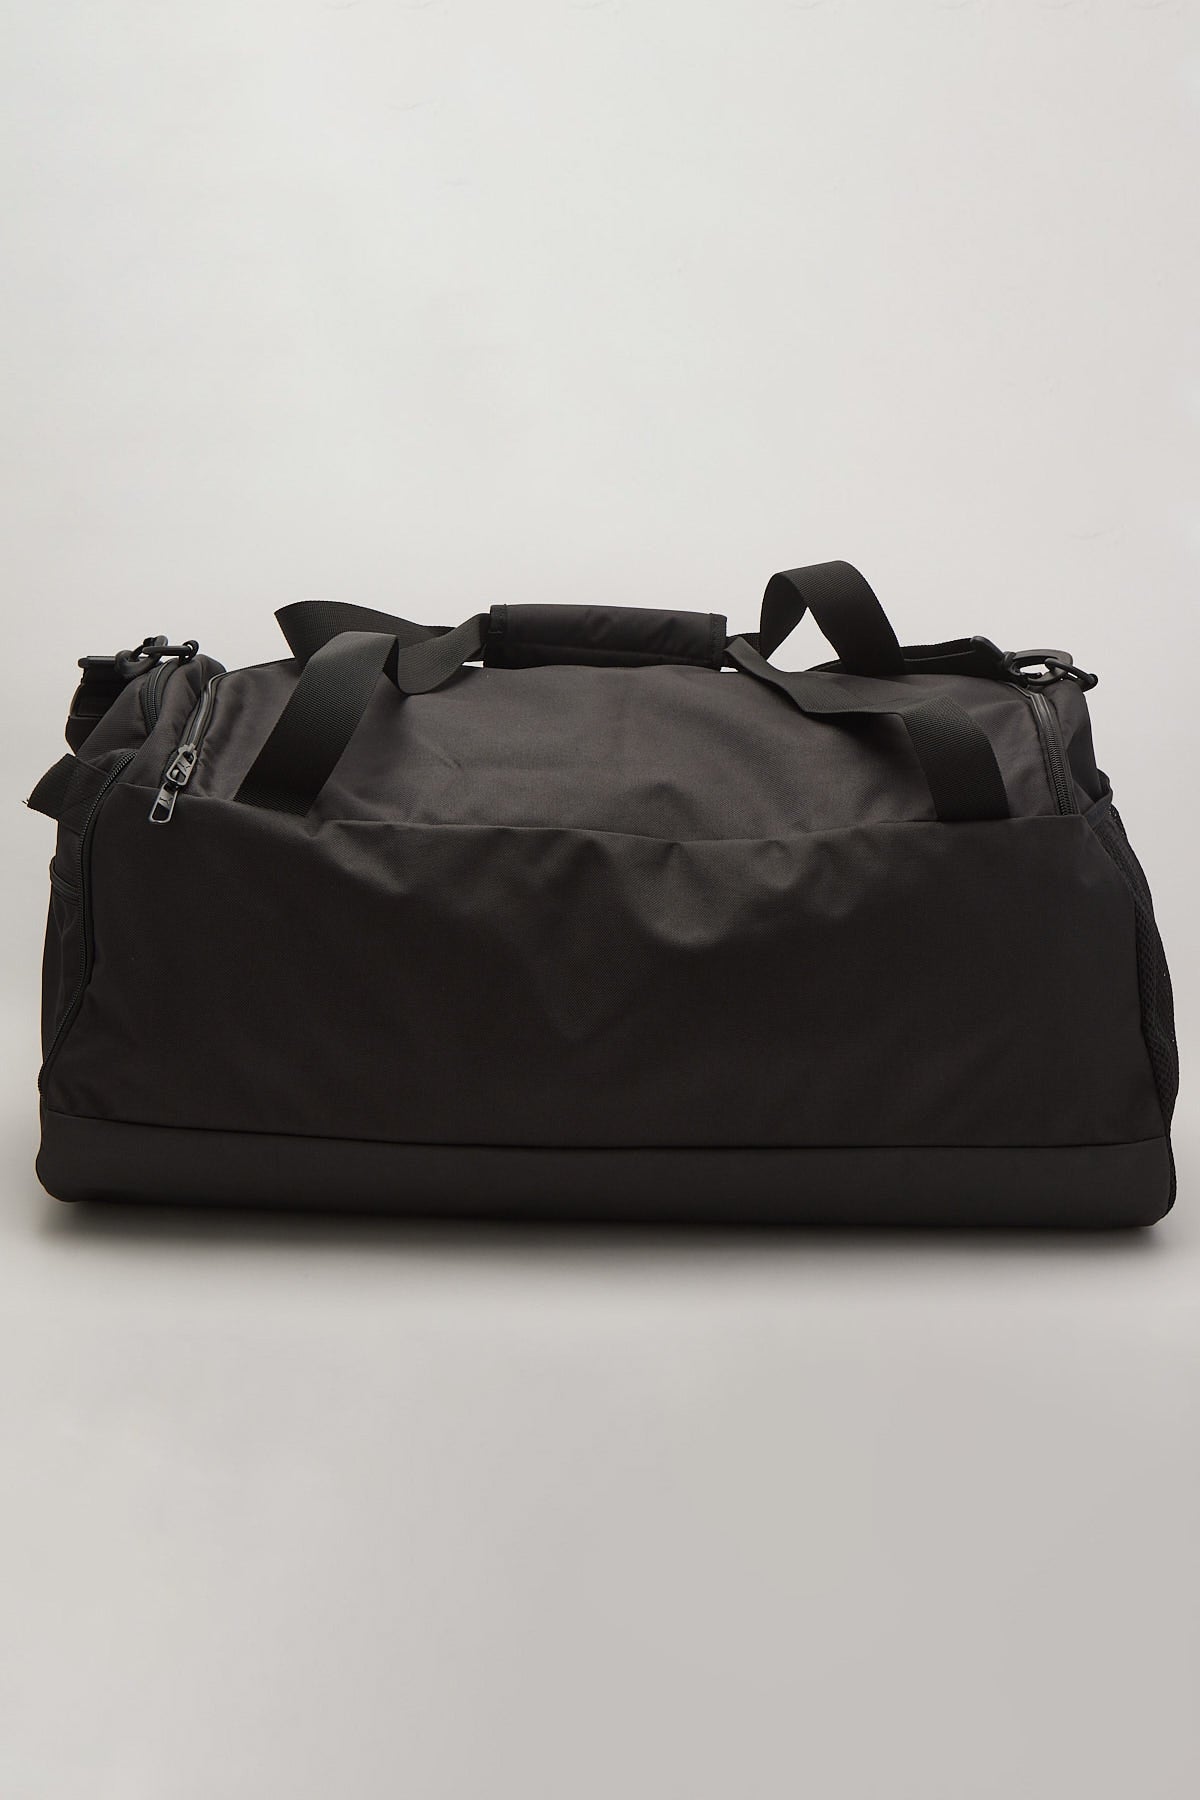 Puma Challenger Duffel Bag Black